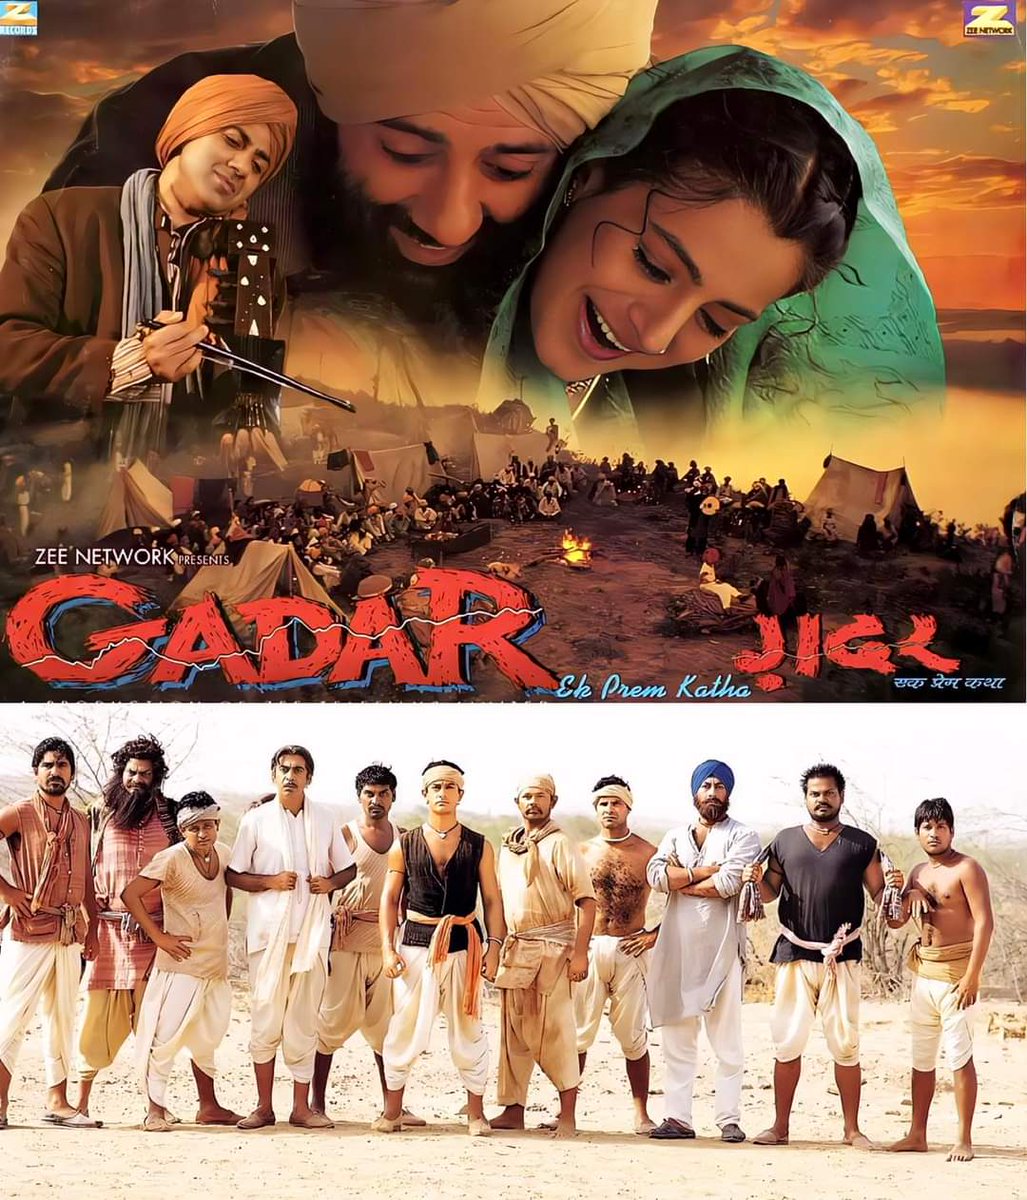 You
Gadar
Lagaan 
22 years of Bollywood movies
Lagaan and Gadar released date 15 June 2001.
Lagaan: Once Upon a Time in India clocked in at 224 minutes. By contrast,
#lagaan #aamir #aamirkhan #sunny #sunnydeol #yashsharma #amrishpuri #vivekshauq #ashutoshgowariker